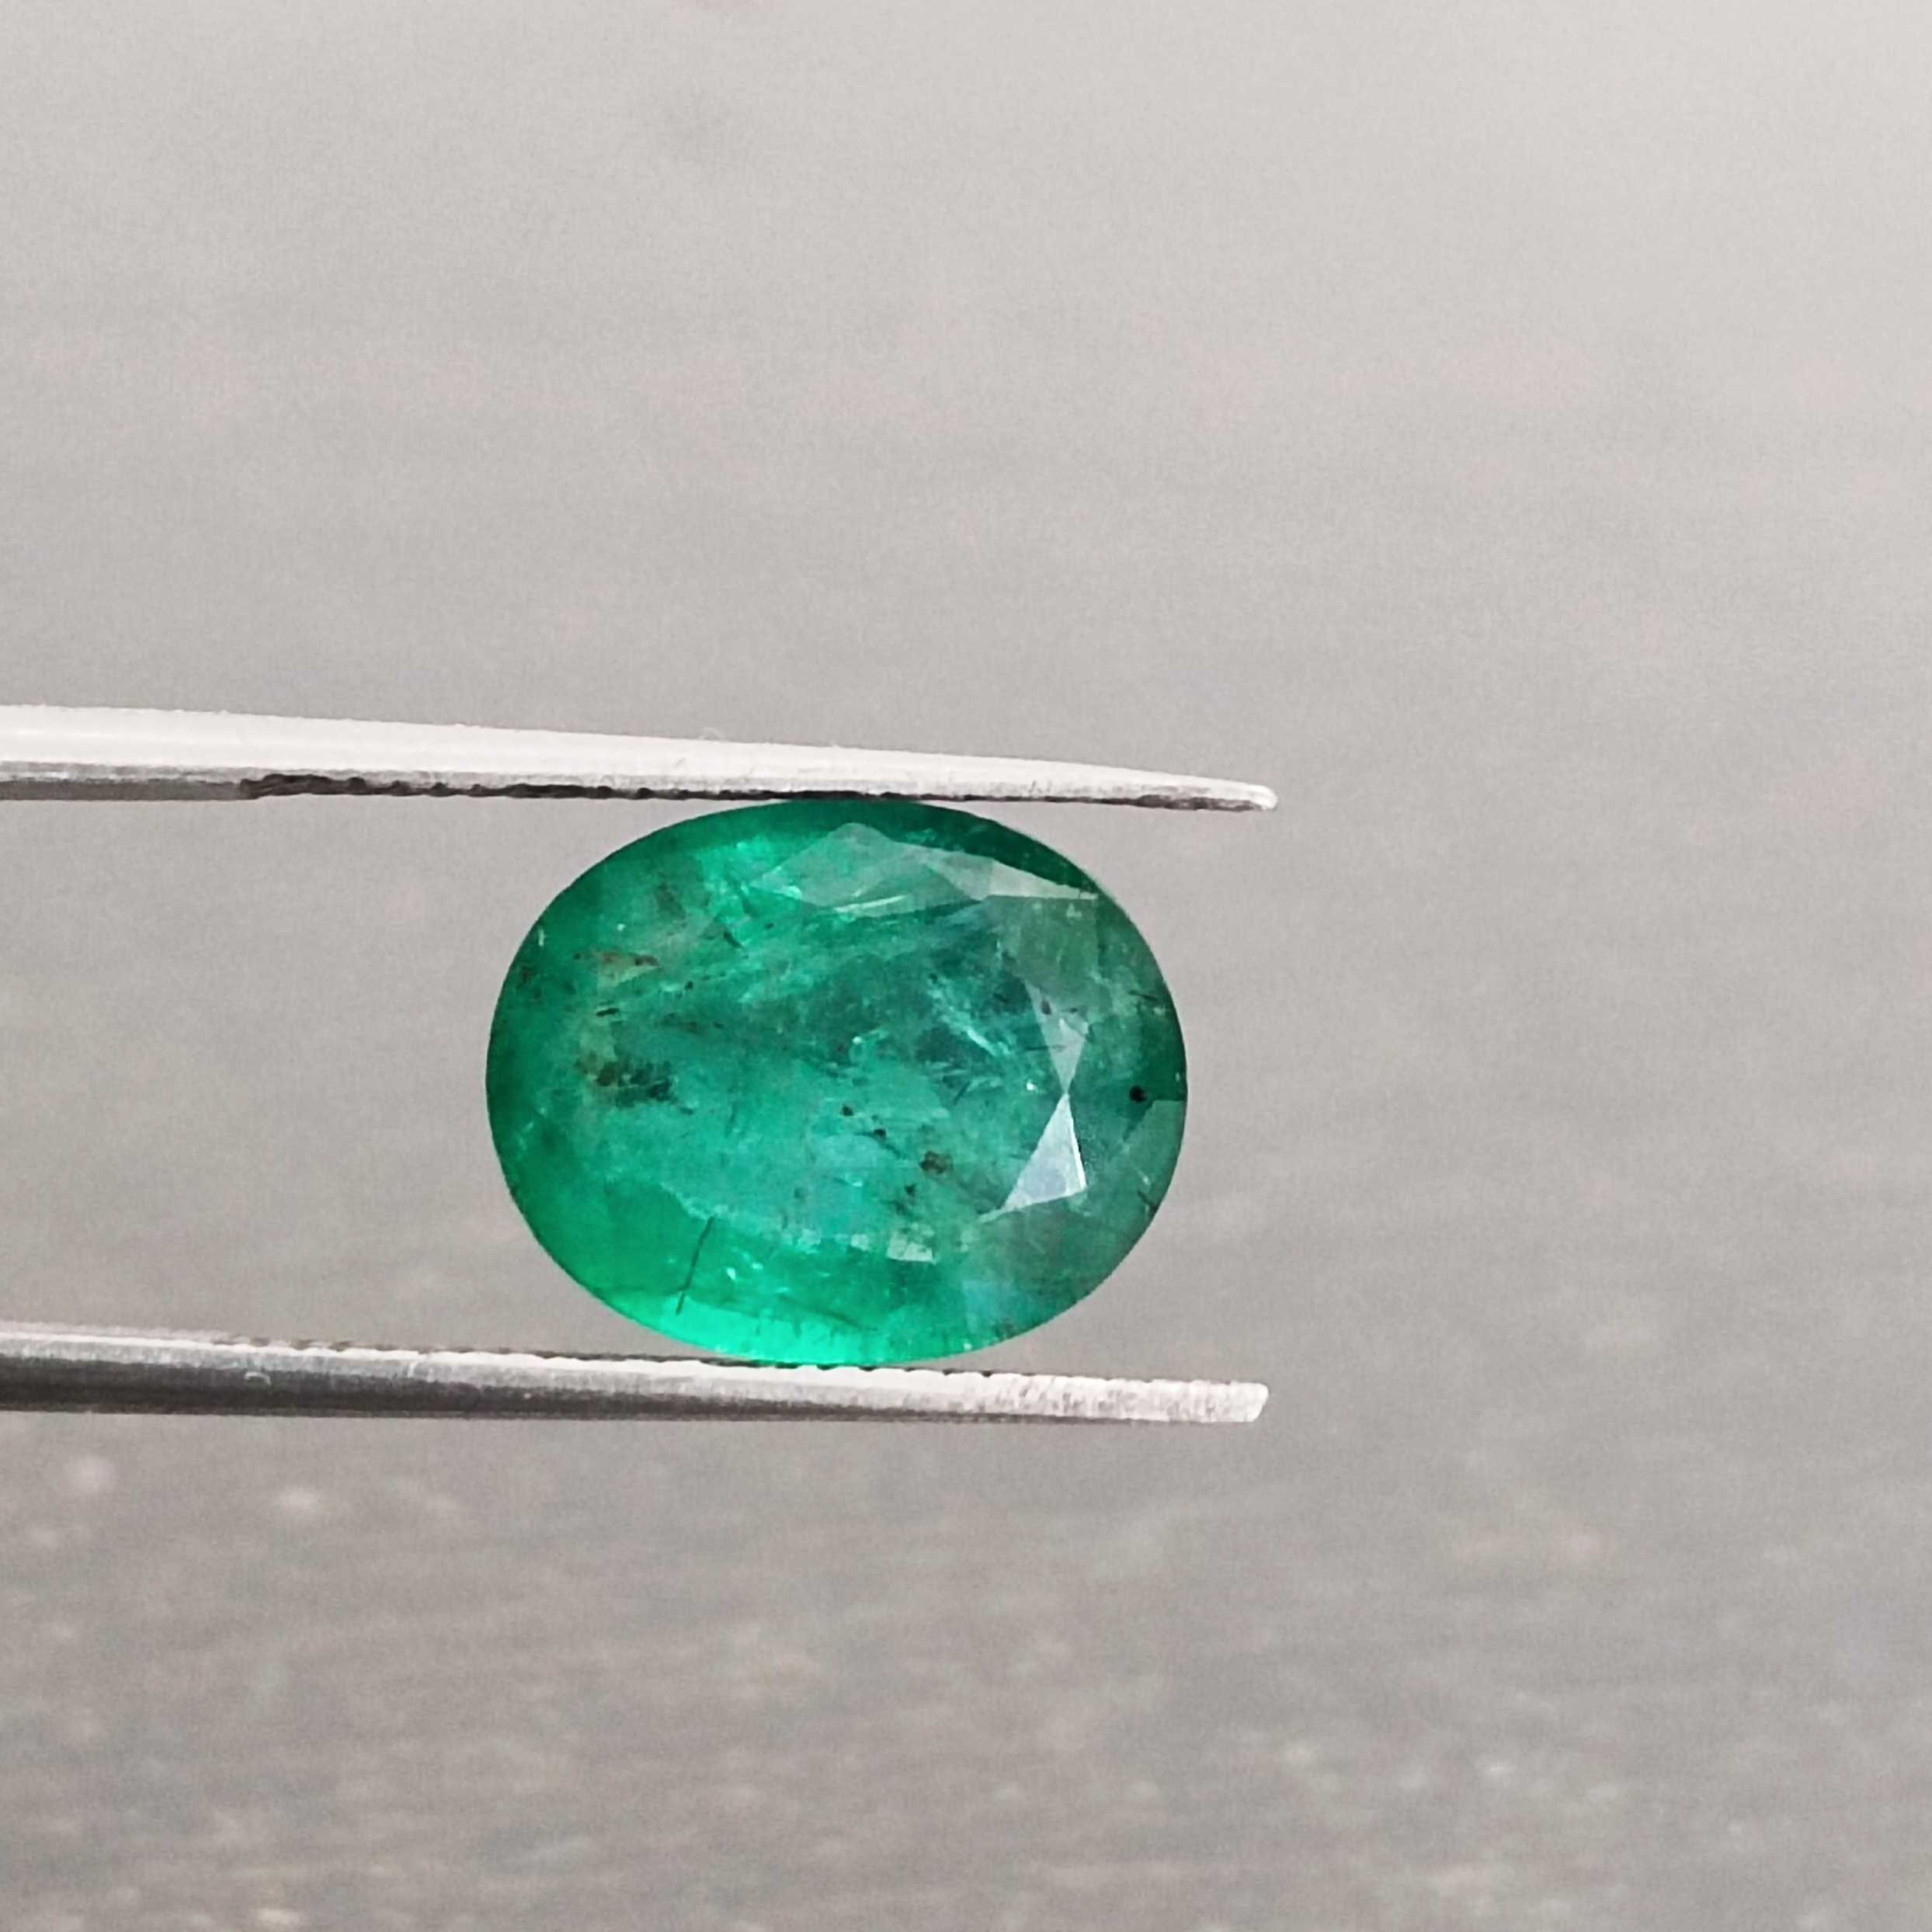 3.57ct deep shiny green oval step cut emerald